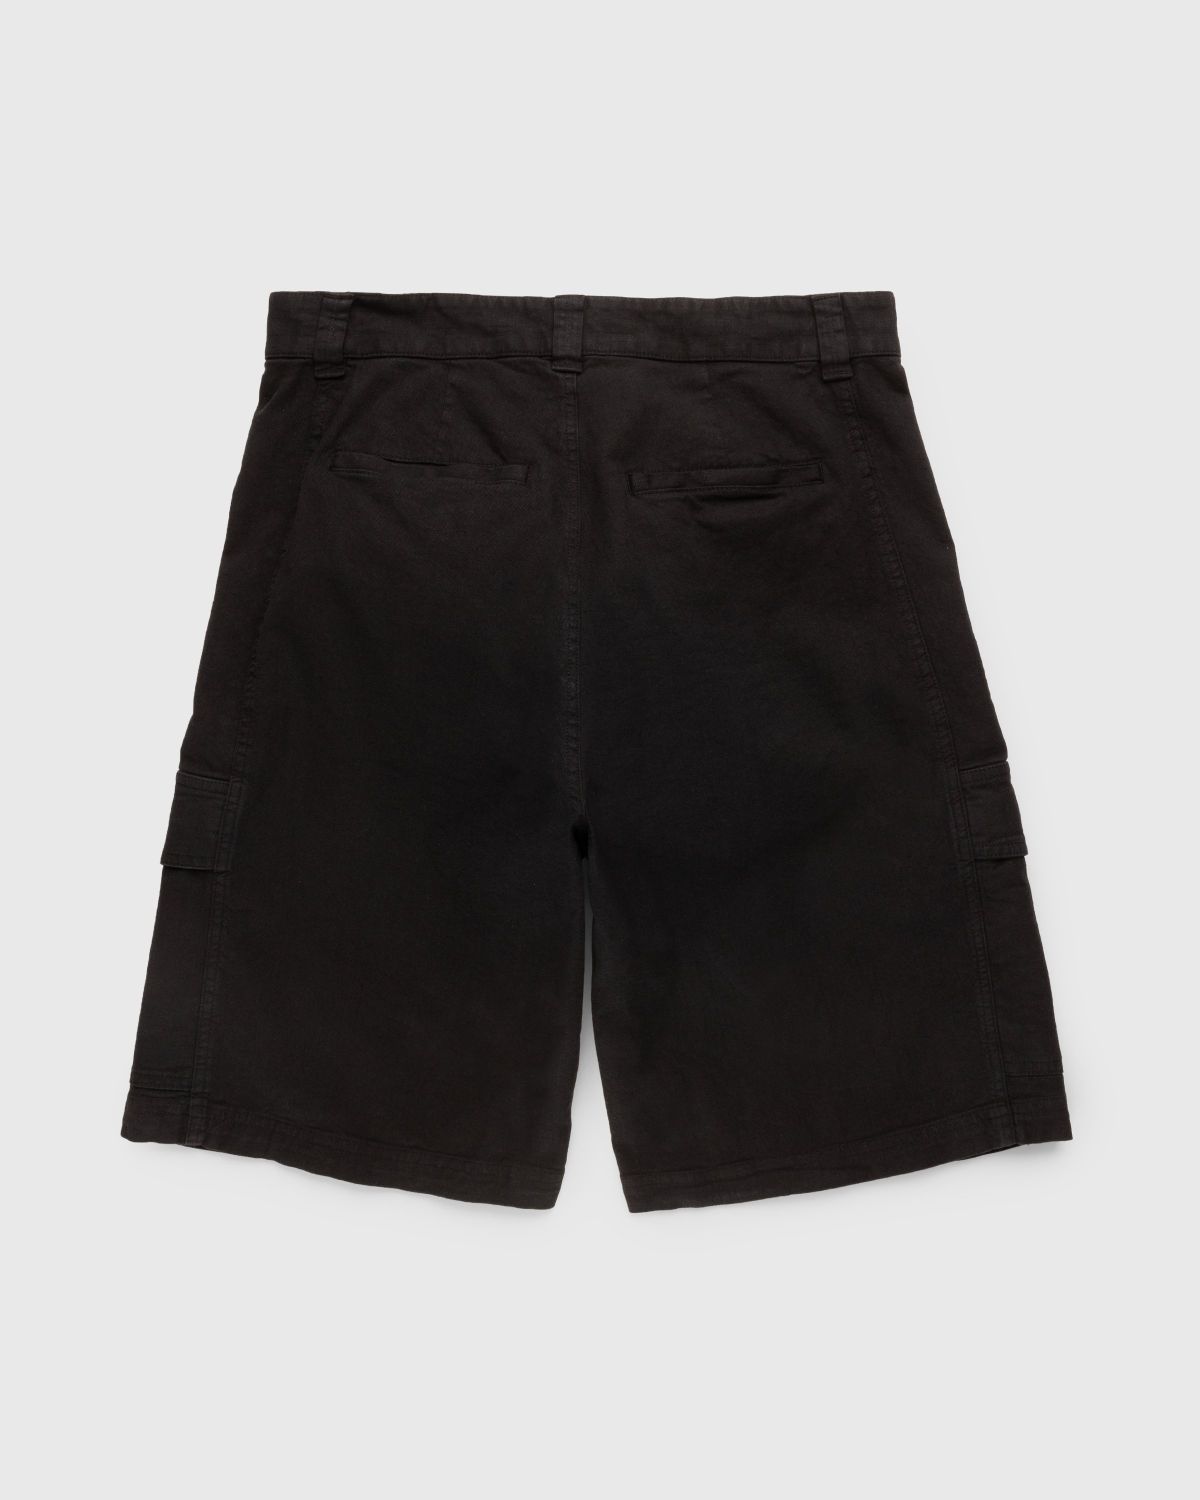 Winnie New York – Linen Cargo Shorts Black - Shorts - Black - Image 2